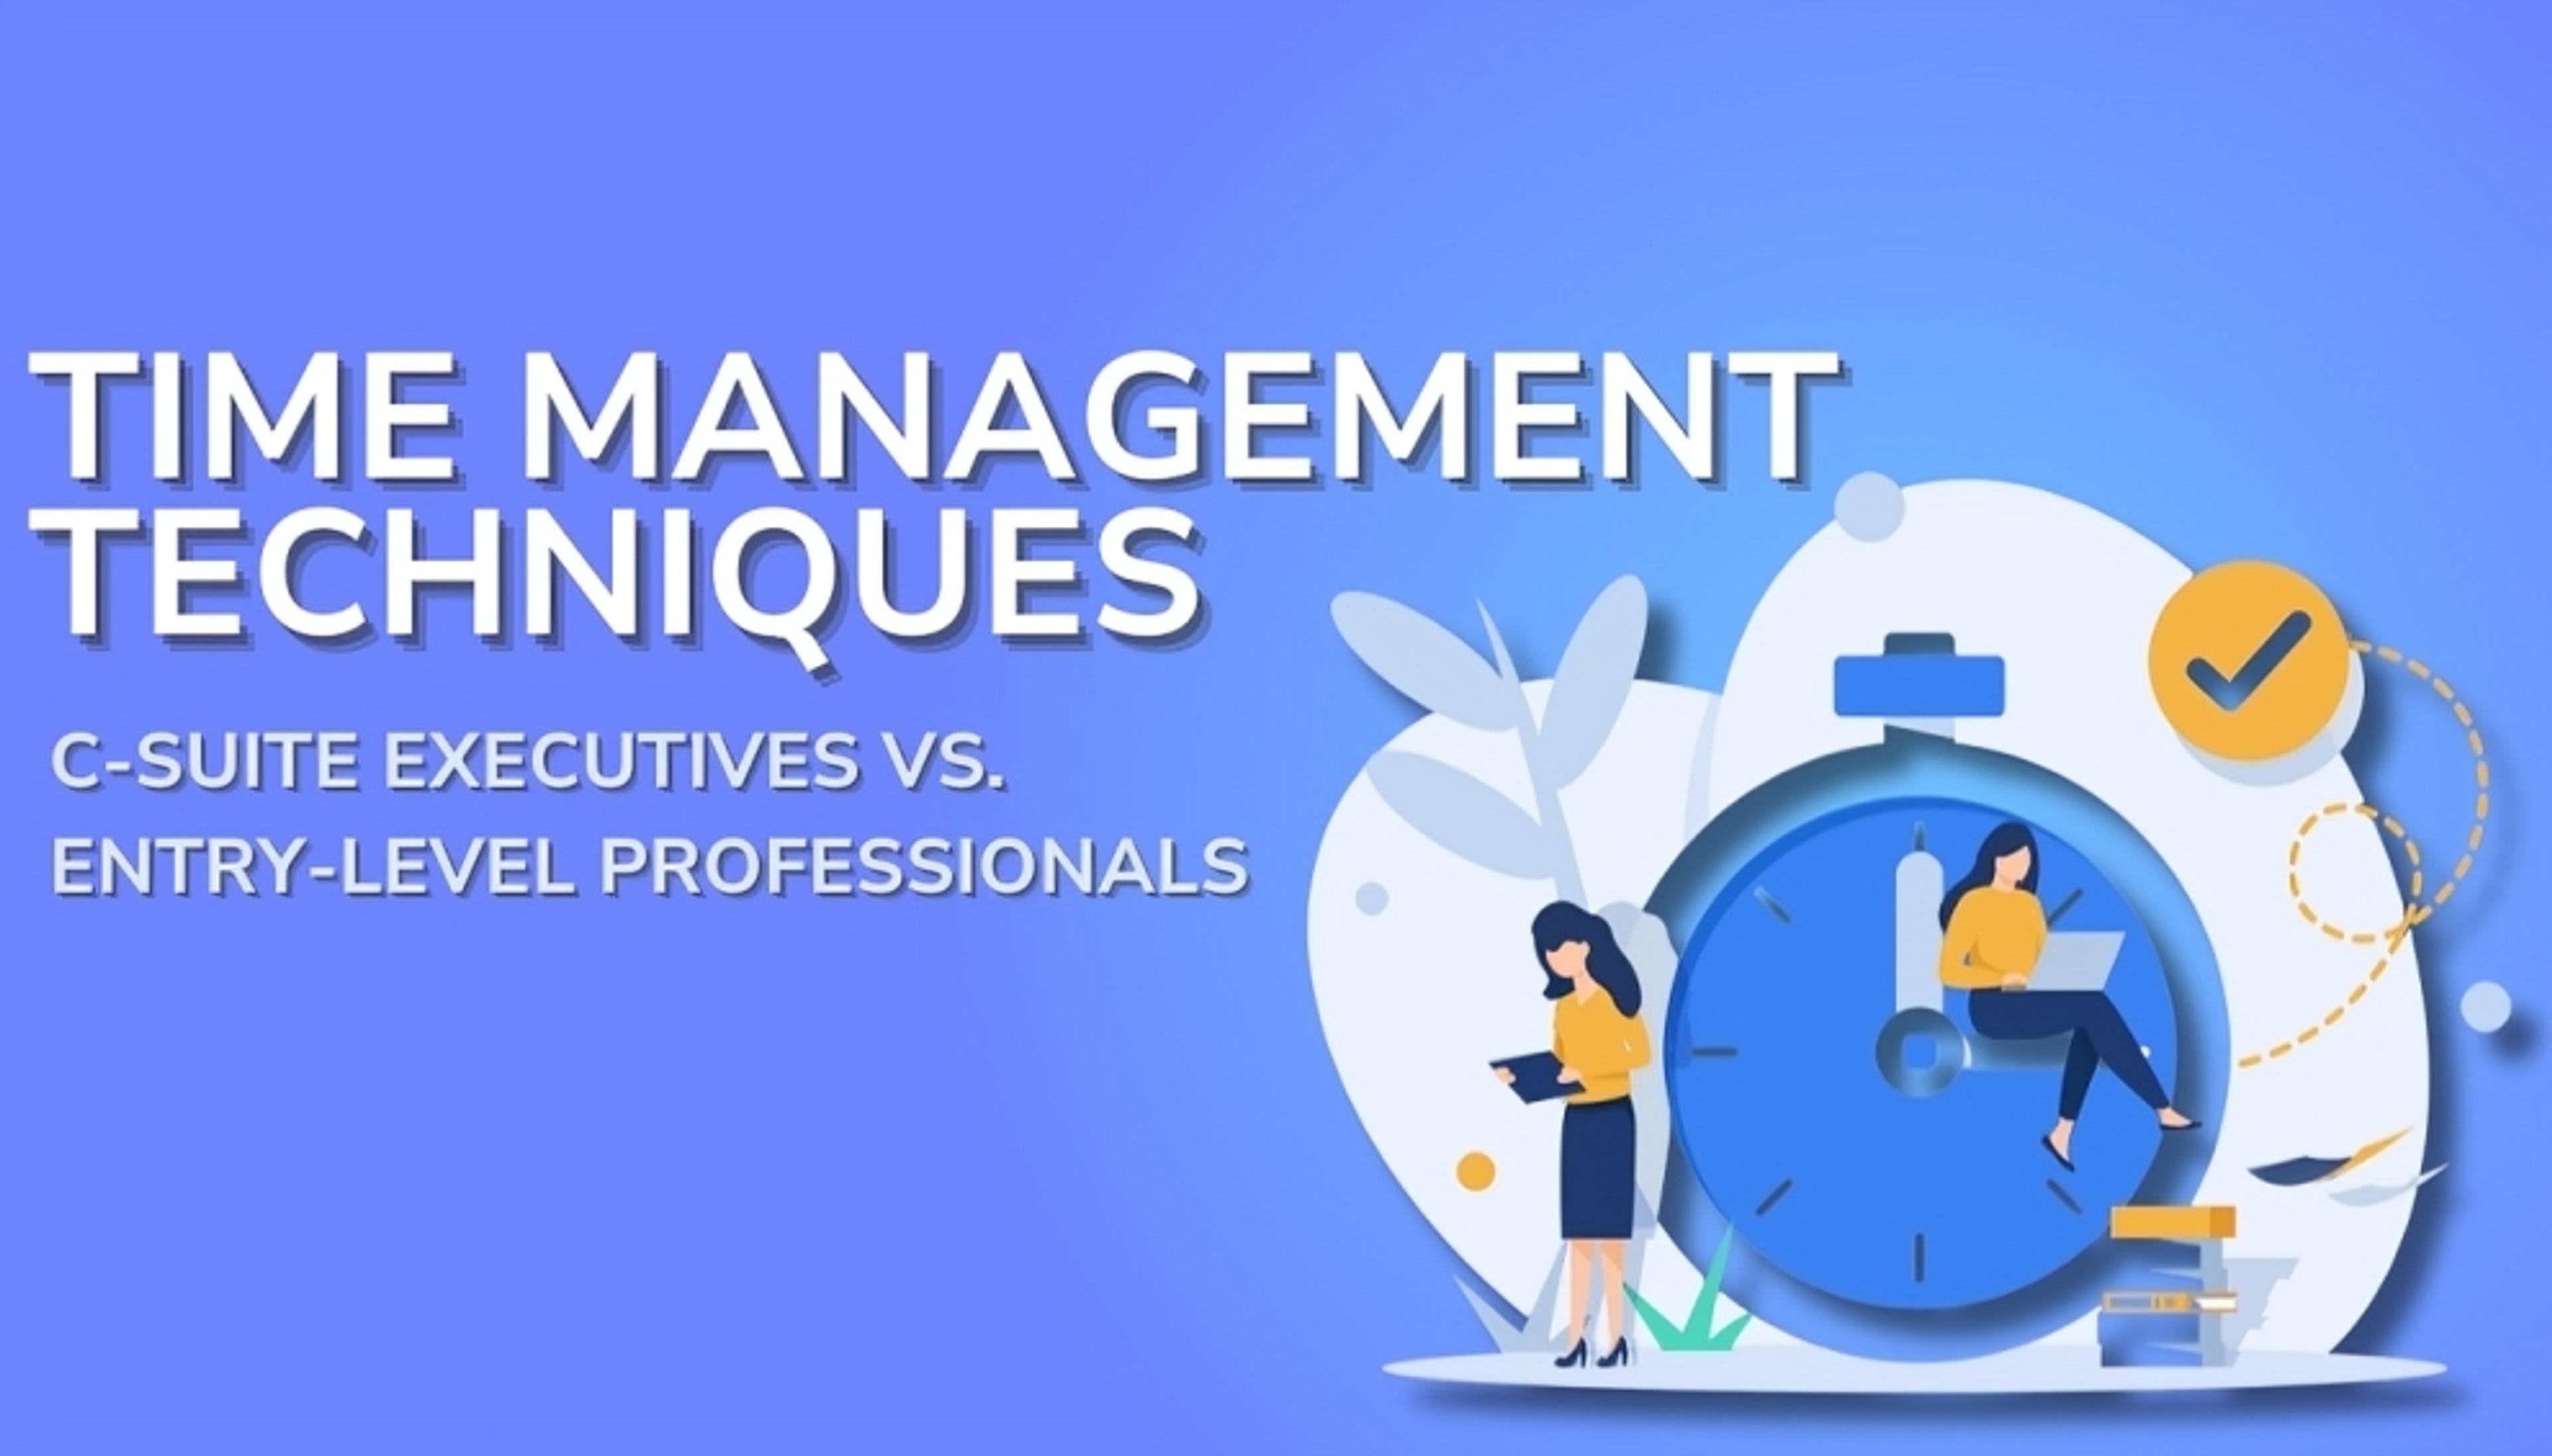 C-Suite Executives vs. Entry-Level Professionals